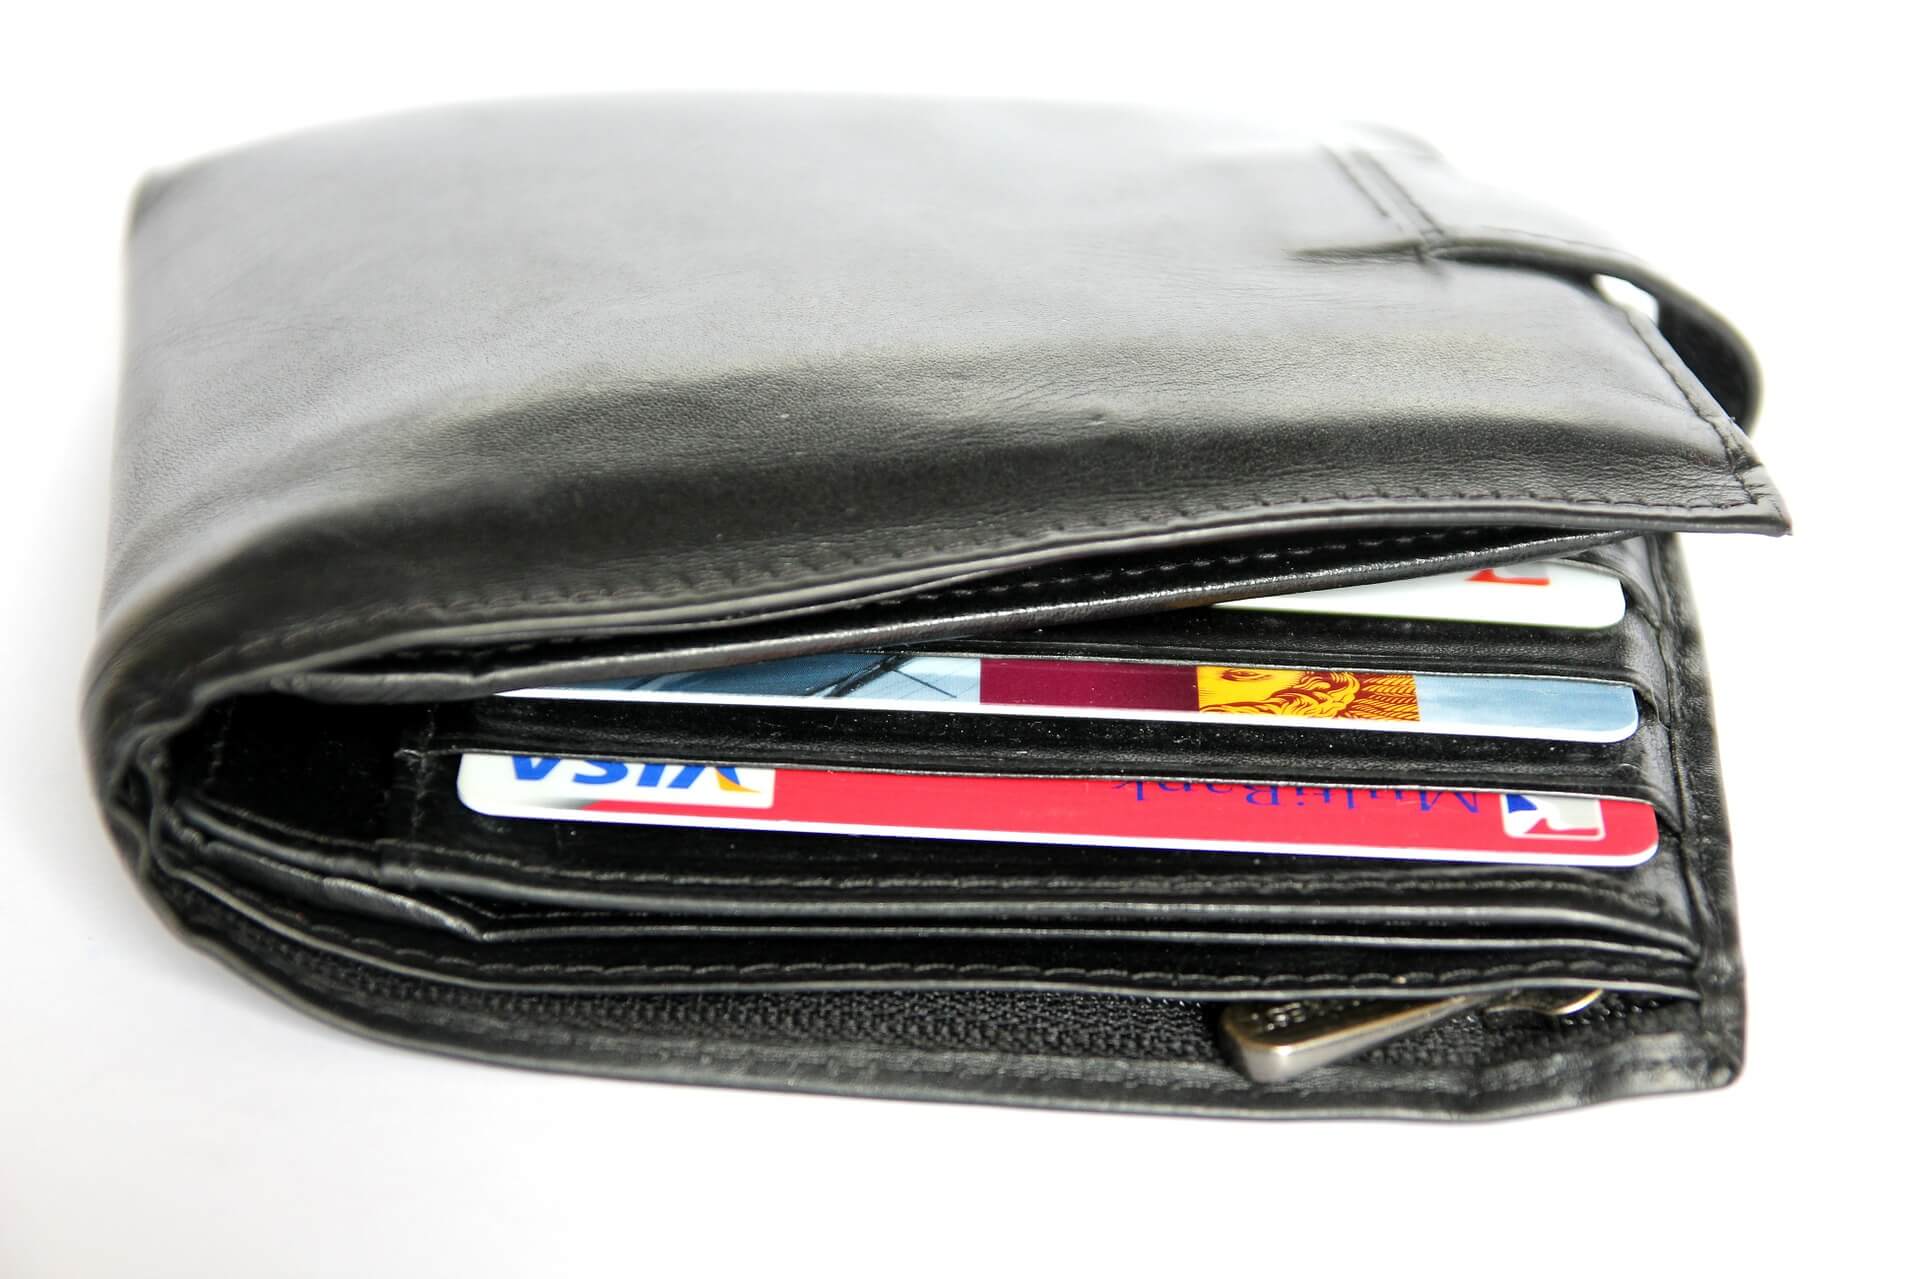 kostenlose Kreditkarte - Kreditkarte verloren